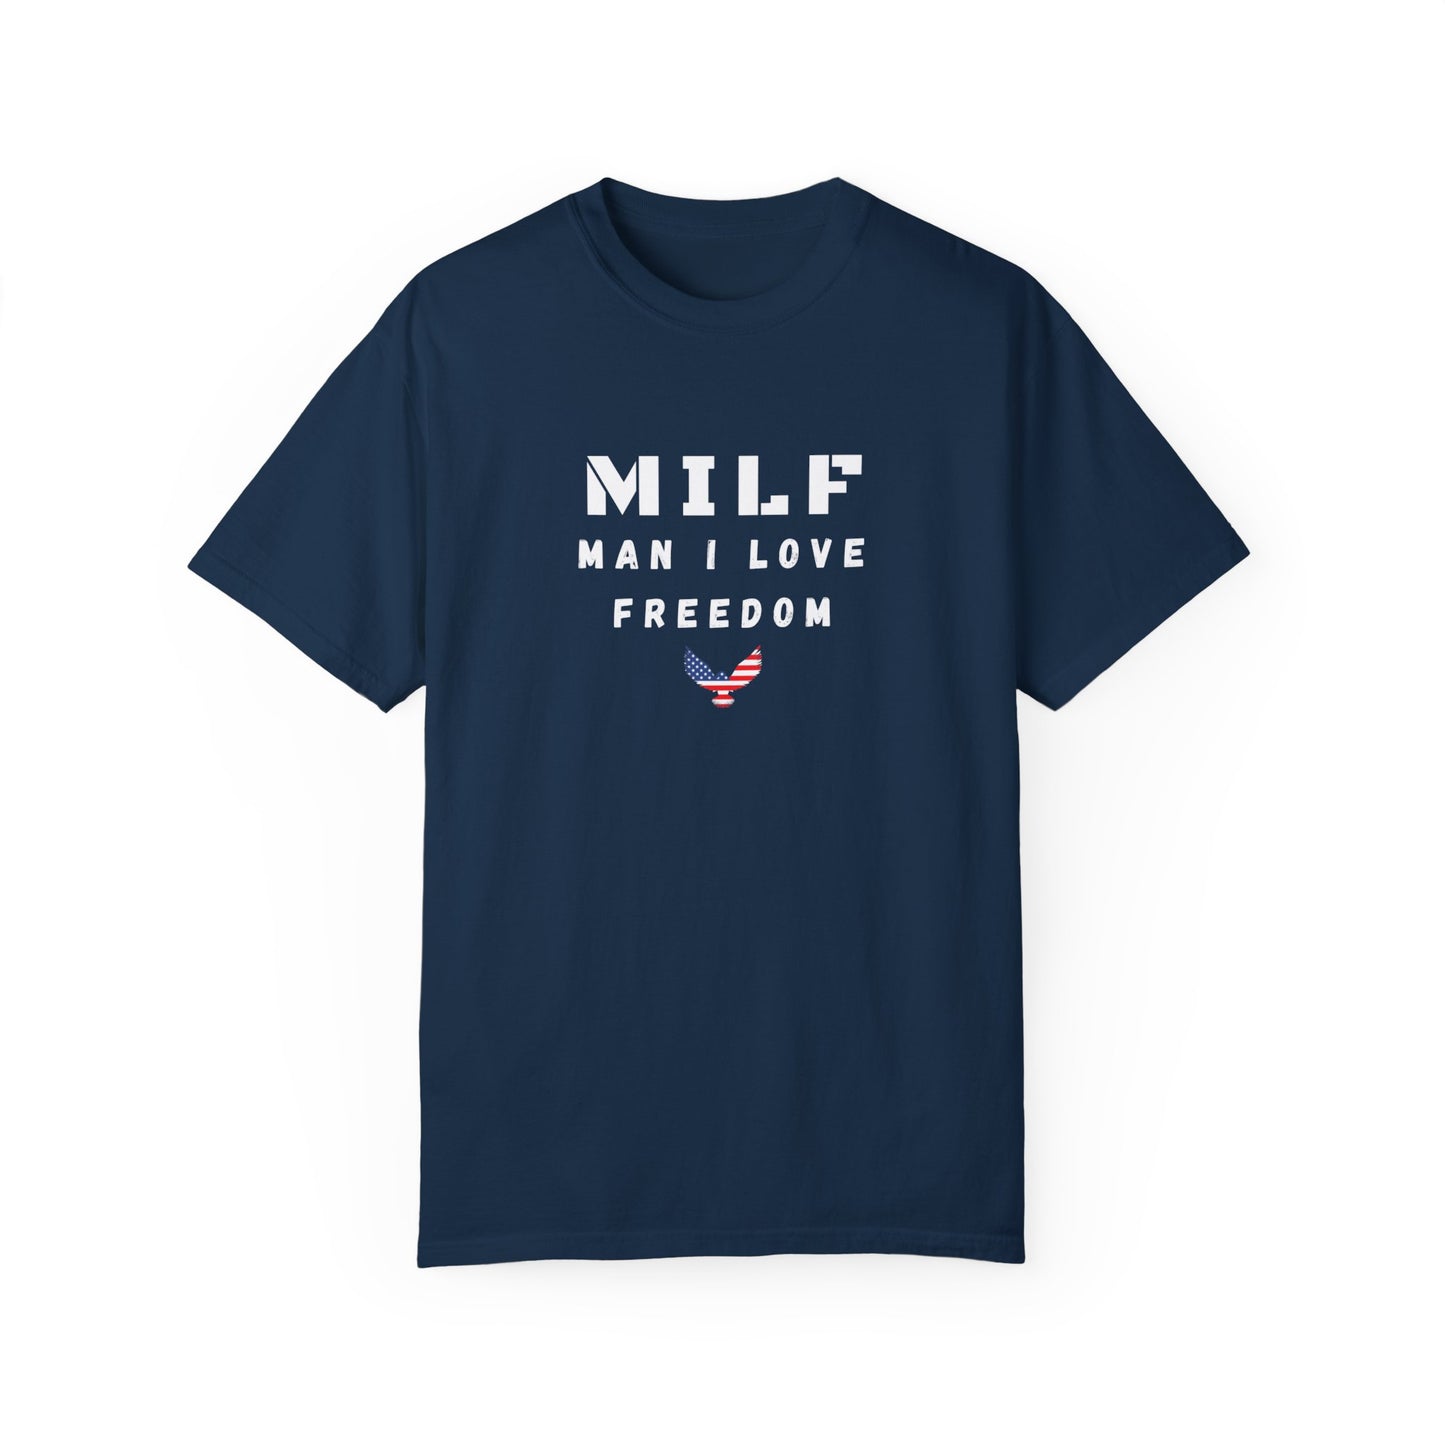 MILF - Man I Love Freedom T-shirt